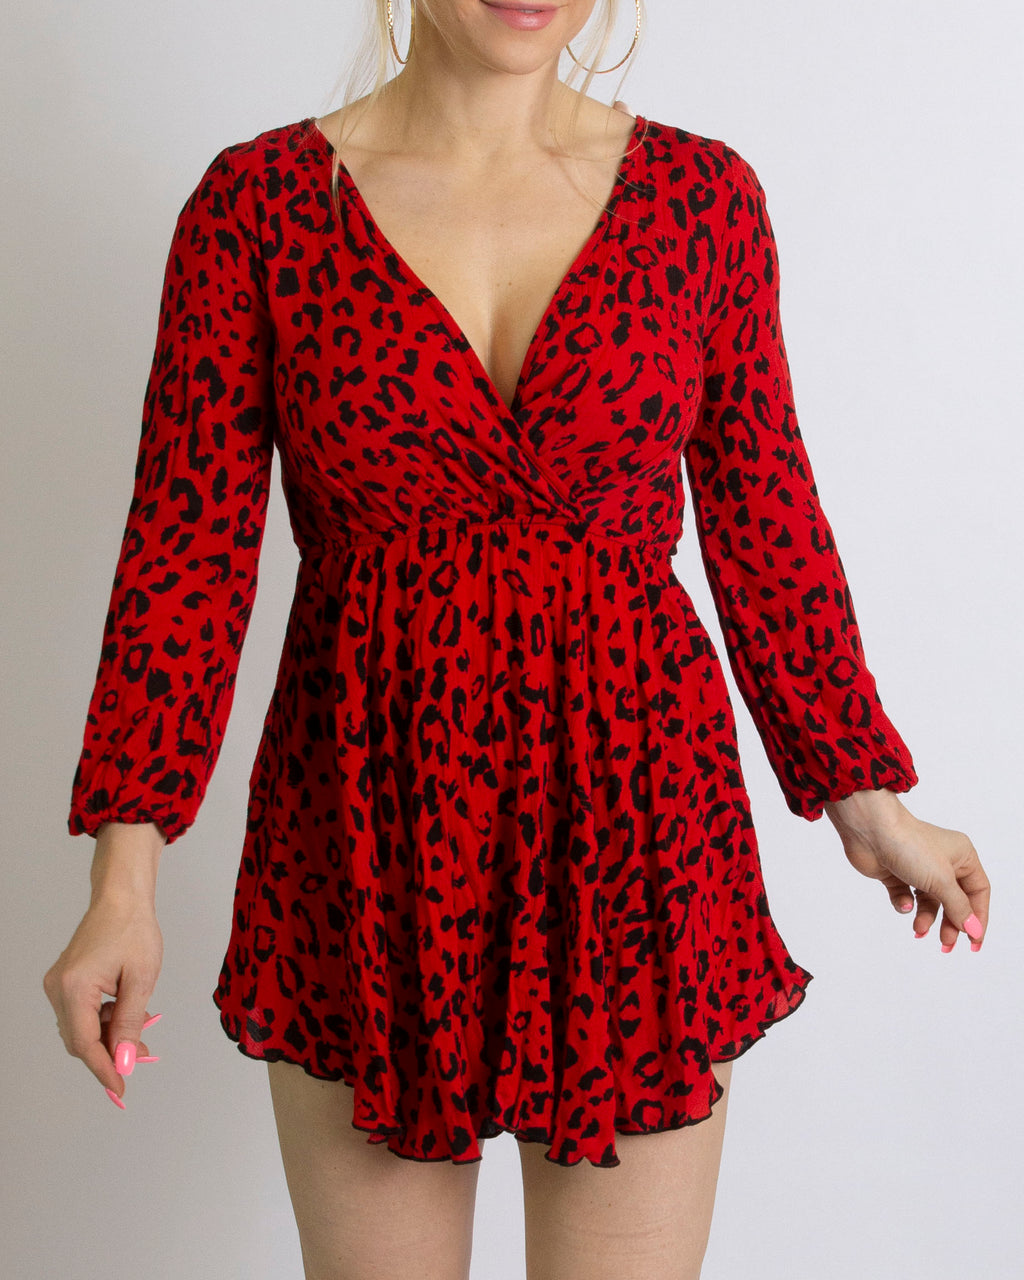 Red cheetah dress